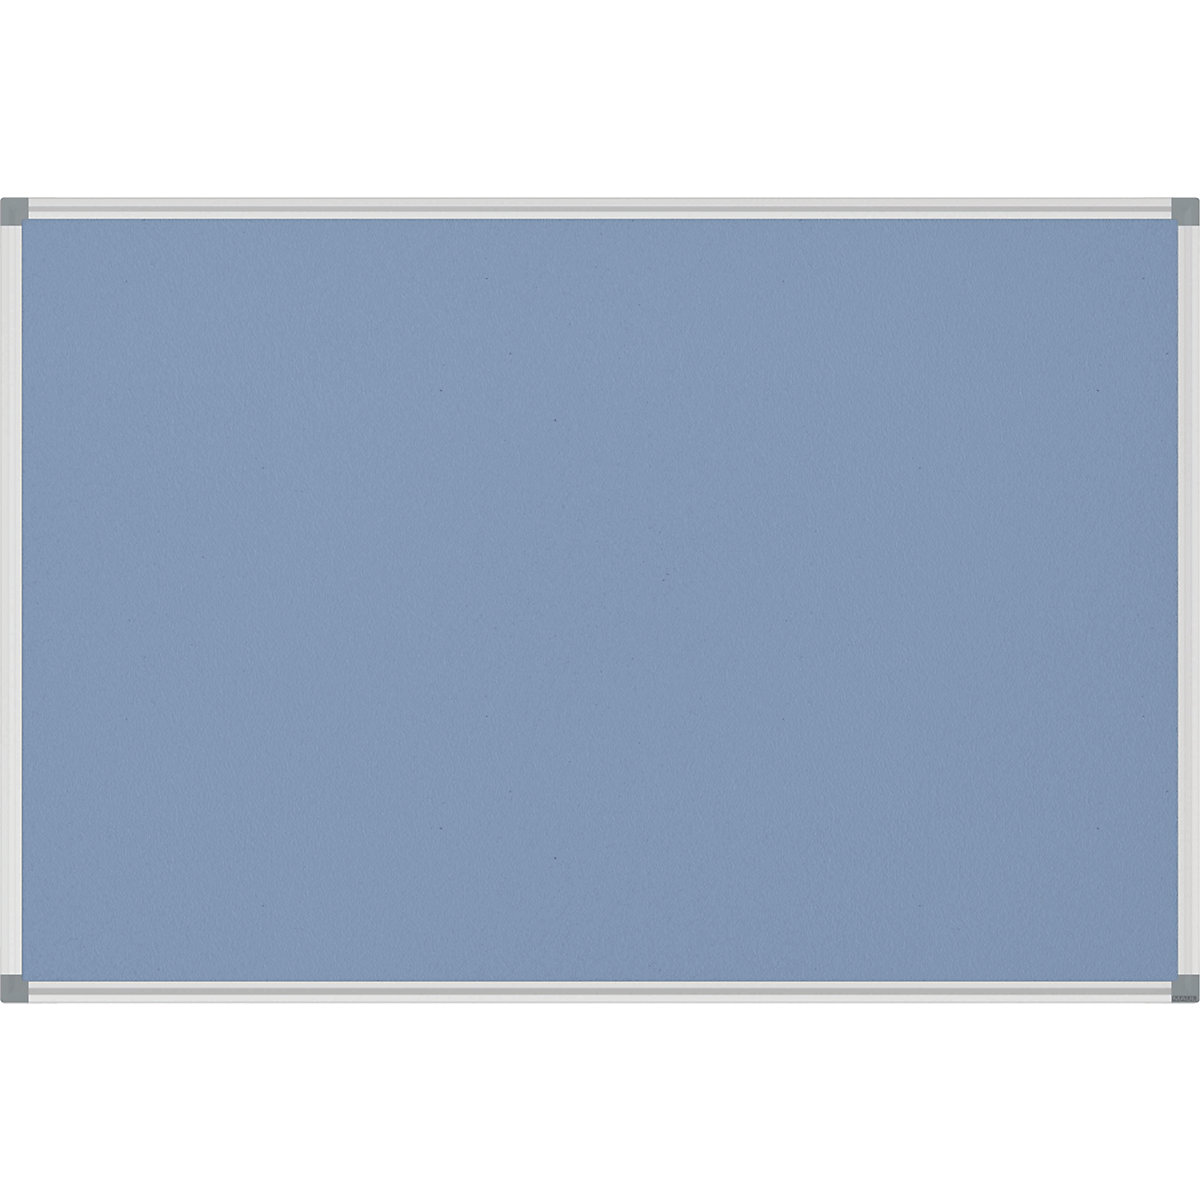 Lavagna a spilli STANDARD – MAUL, rivestimento in feltro, blu chiaro, largh. x alt. 900 x 600 mm-2